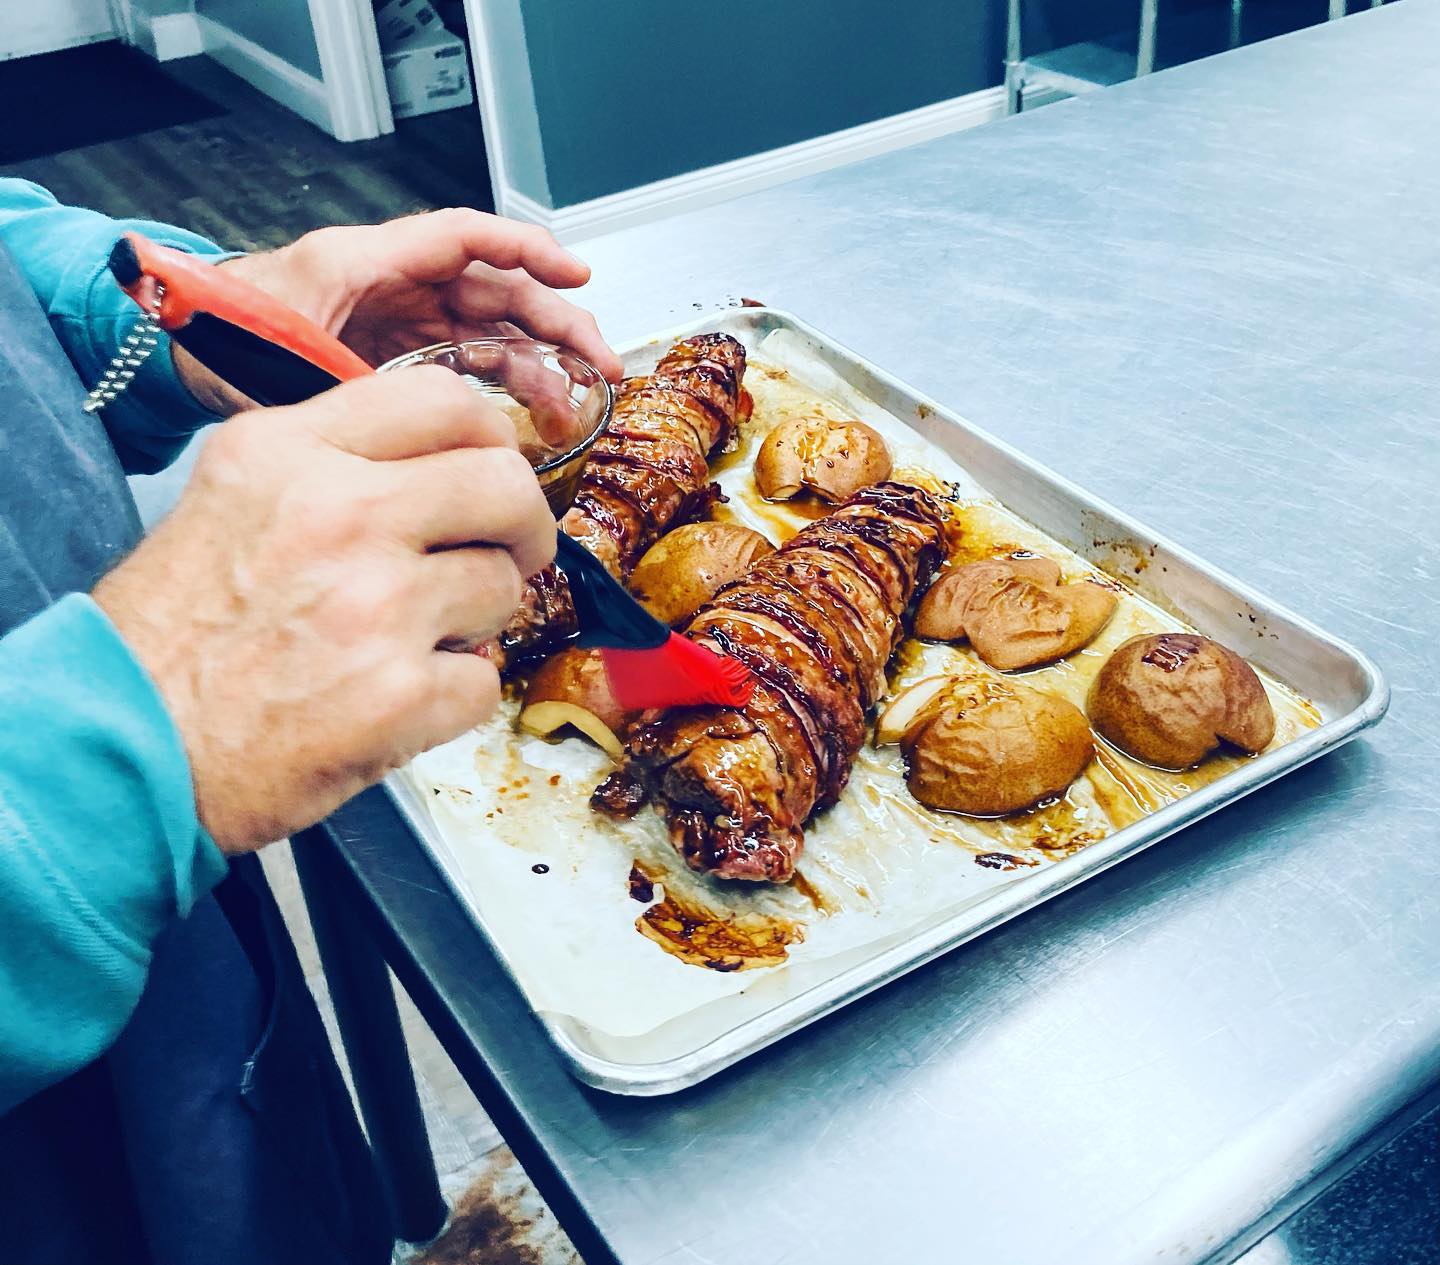 Sheet Pan Supper Class- bacon wrapped pork tenderloin w pears and maple balsamic glaze #yum #foryou #cookingclass #weeknightdinner @tasteandtechnique